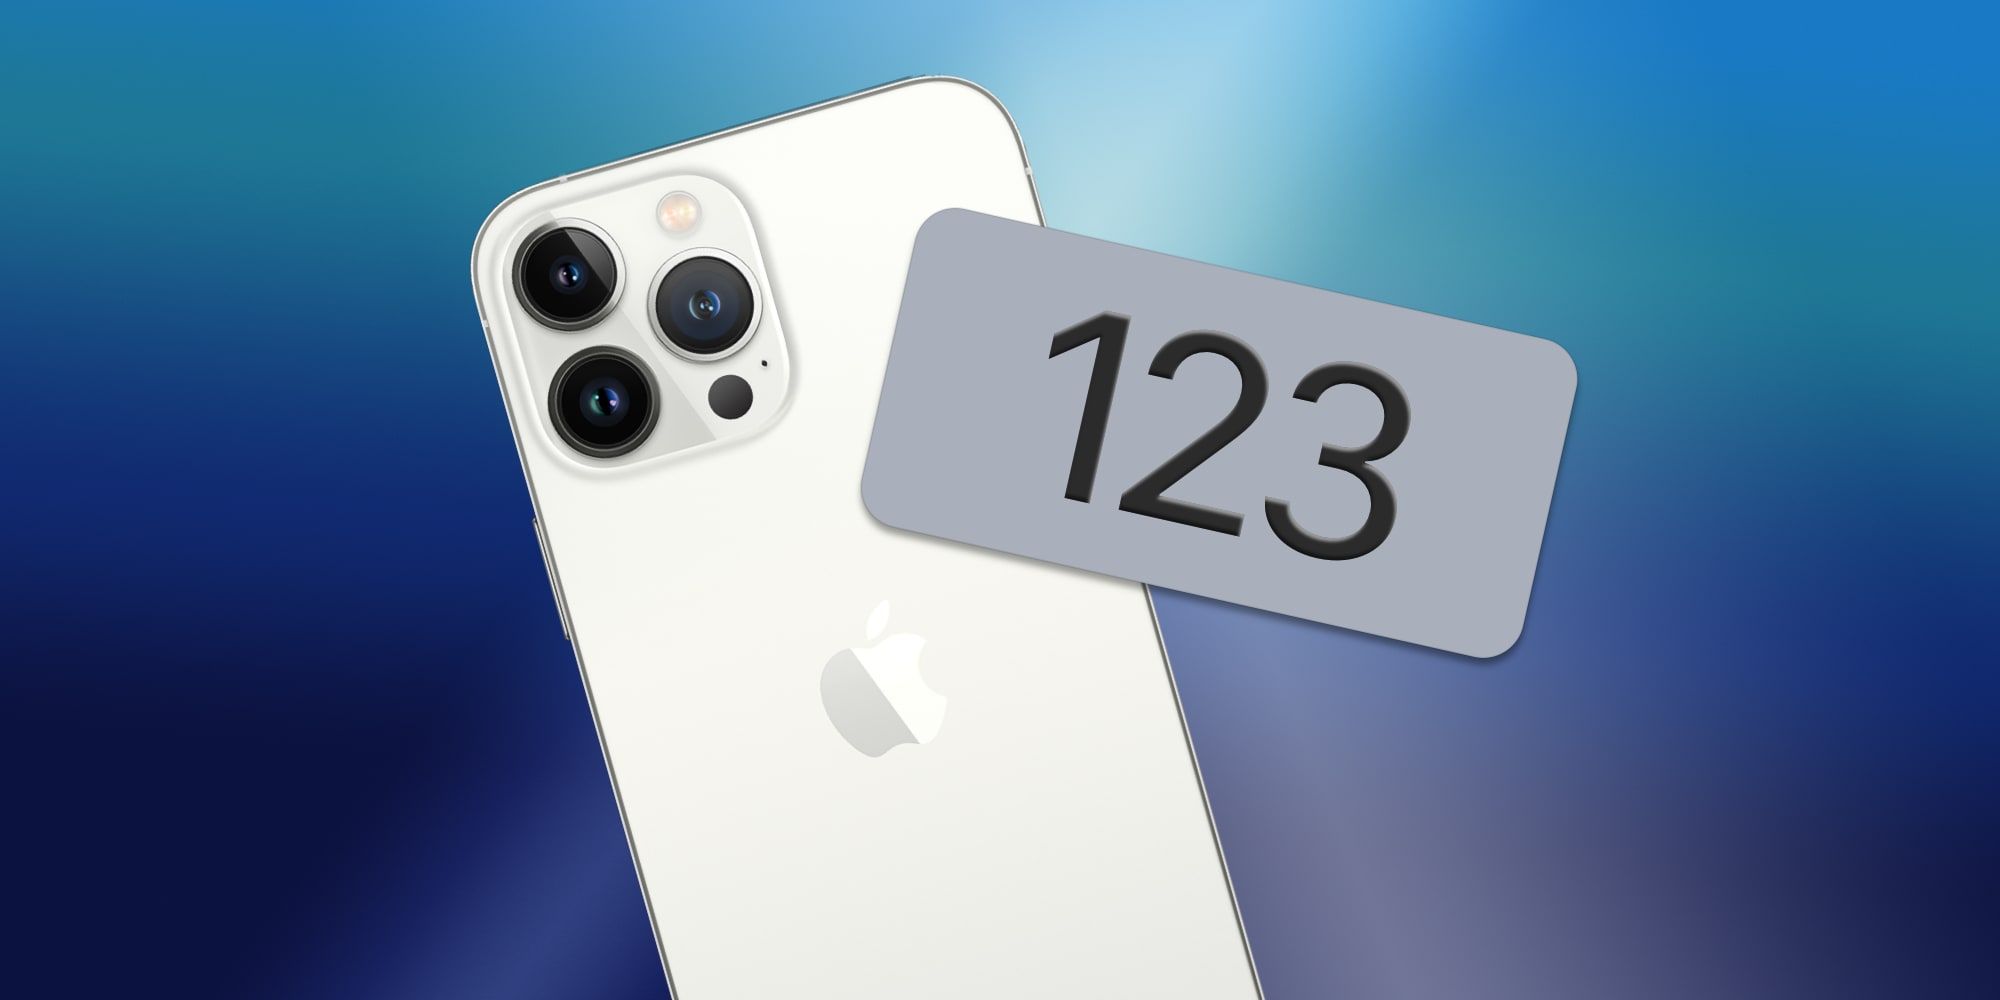 Apple iPhone 13 Pro Back And 123 Key Numeric